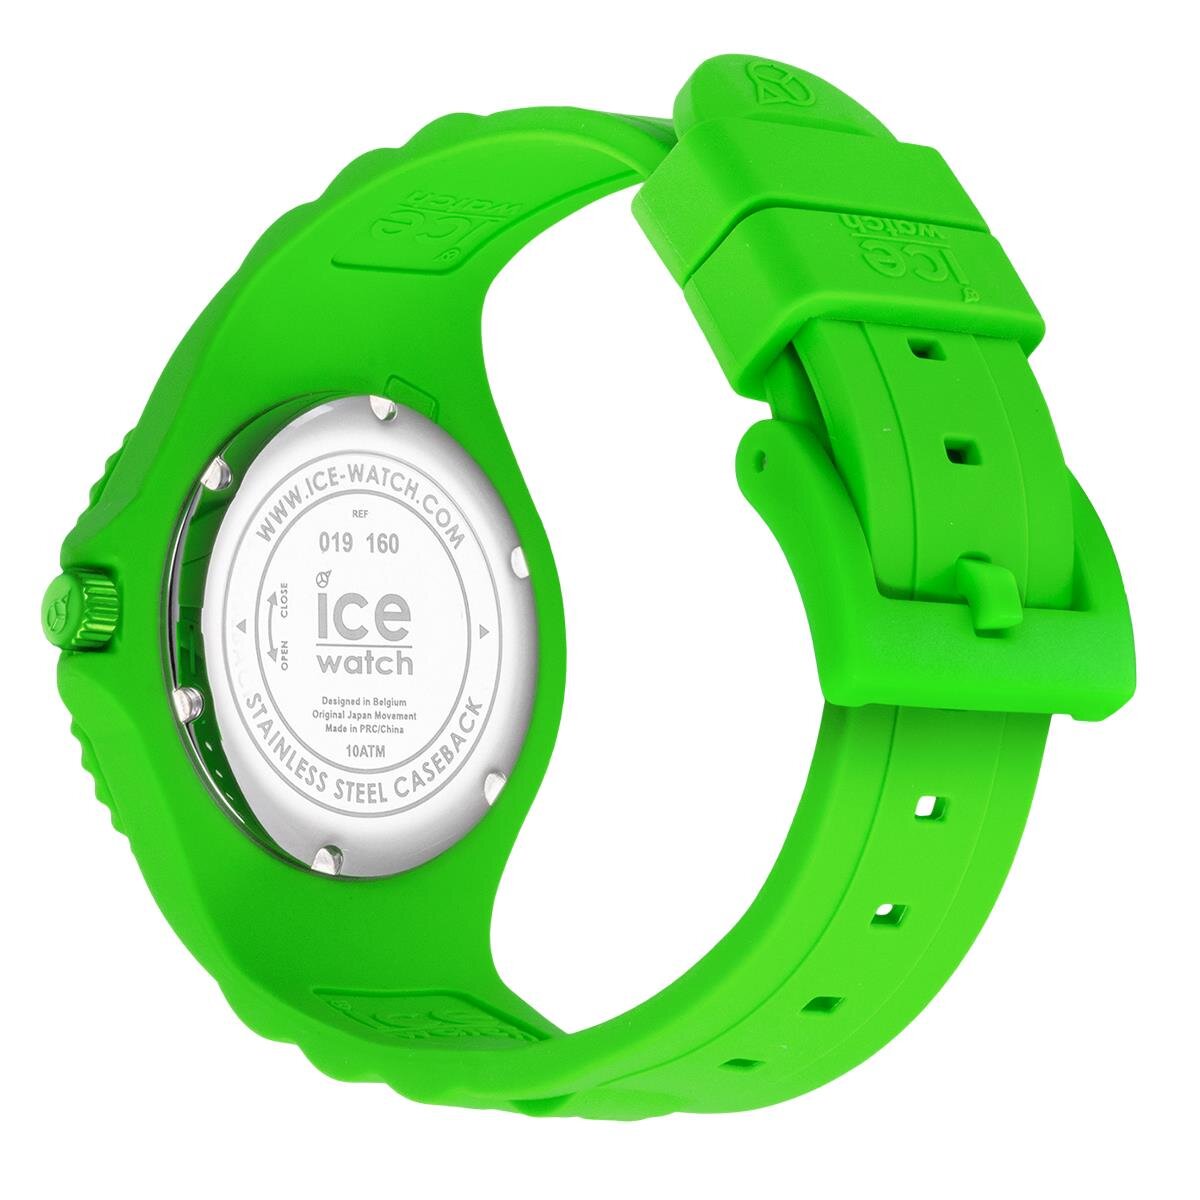 Unisex | ICE generation 019160 Ice-Watch 019160 Flashy Uhr green